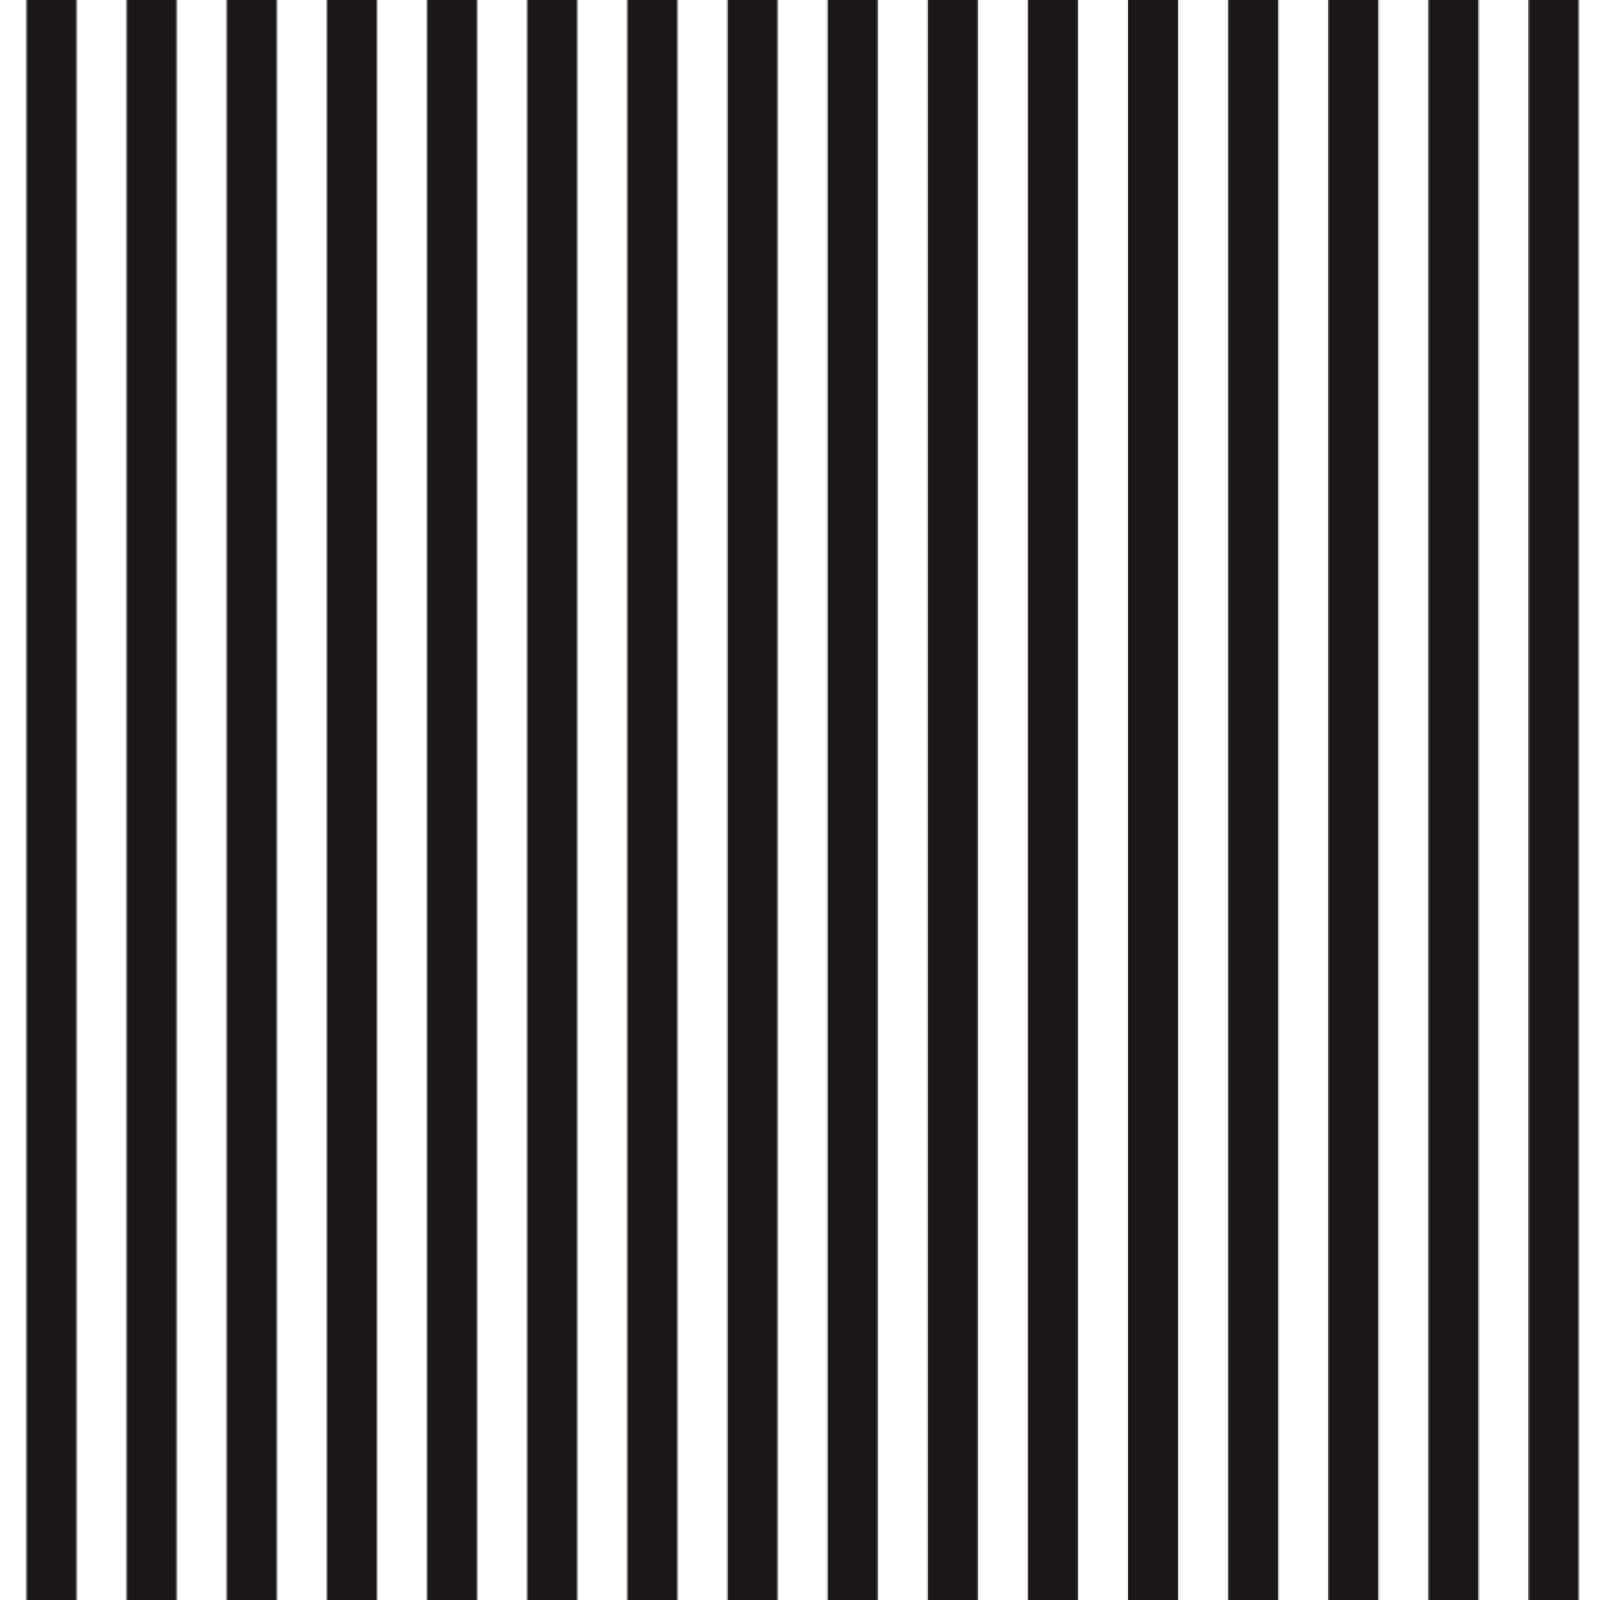 Stylish Black and White Striped Background